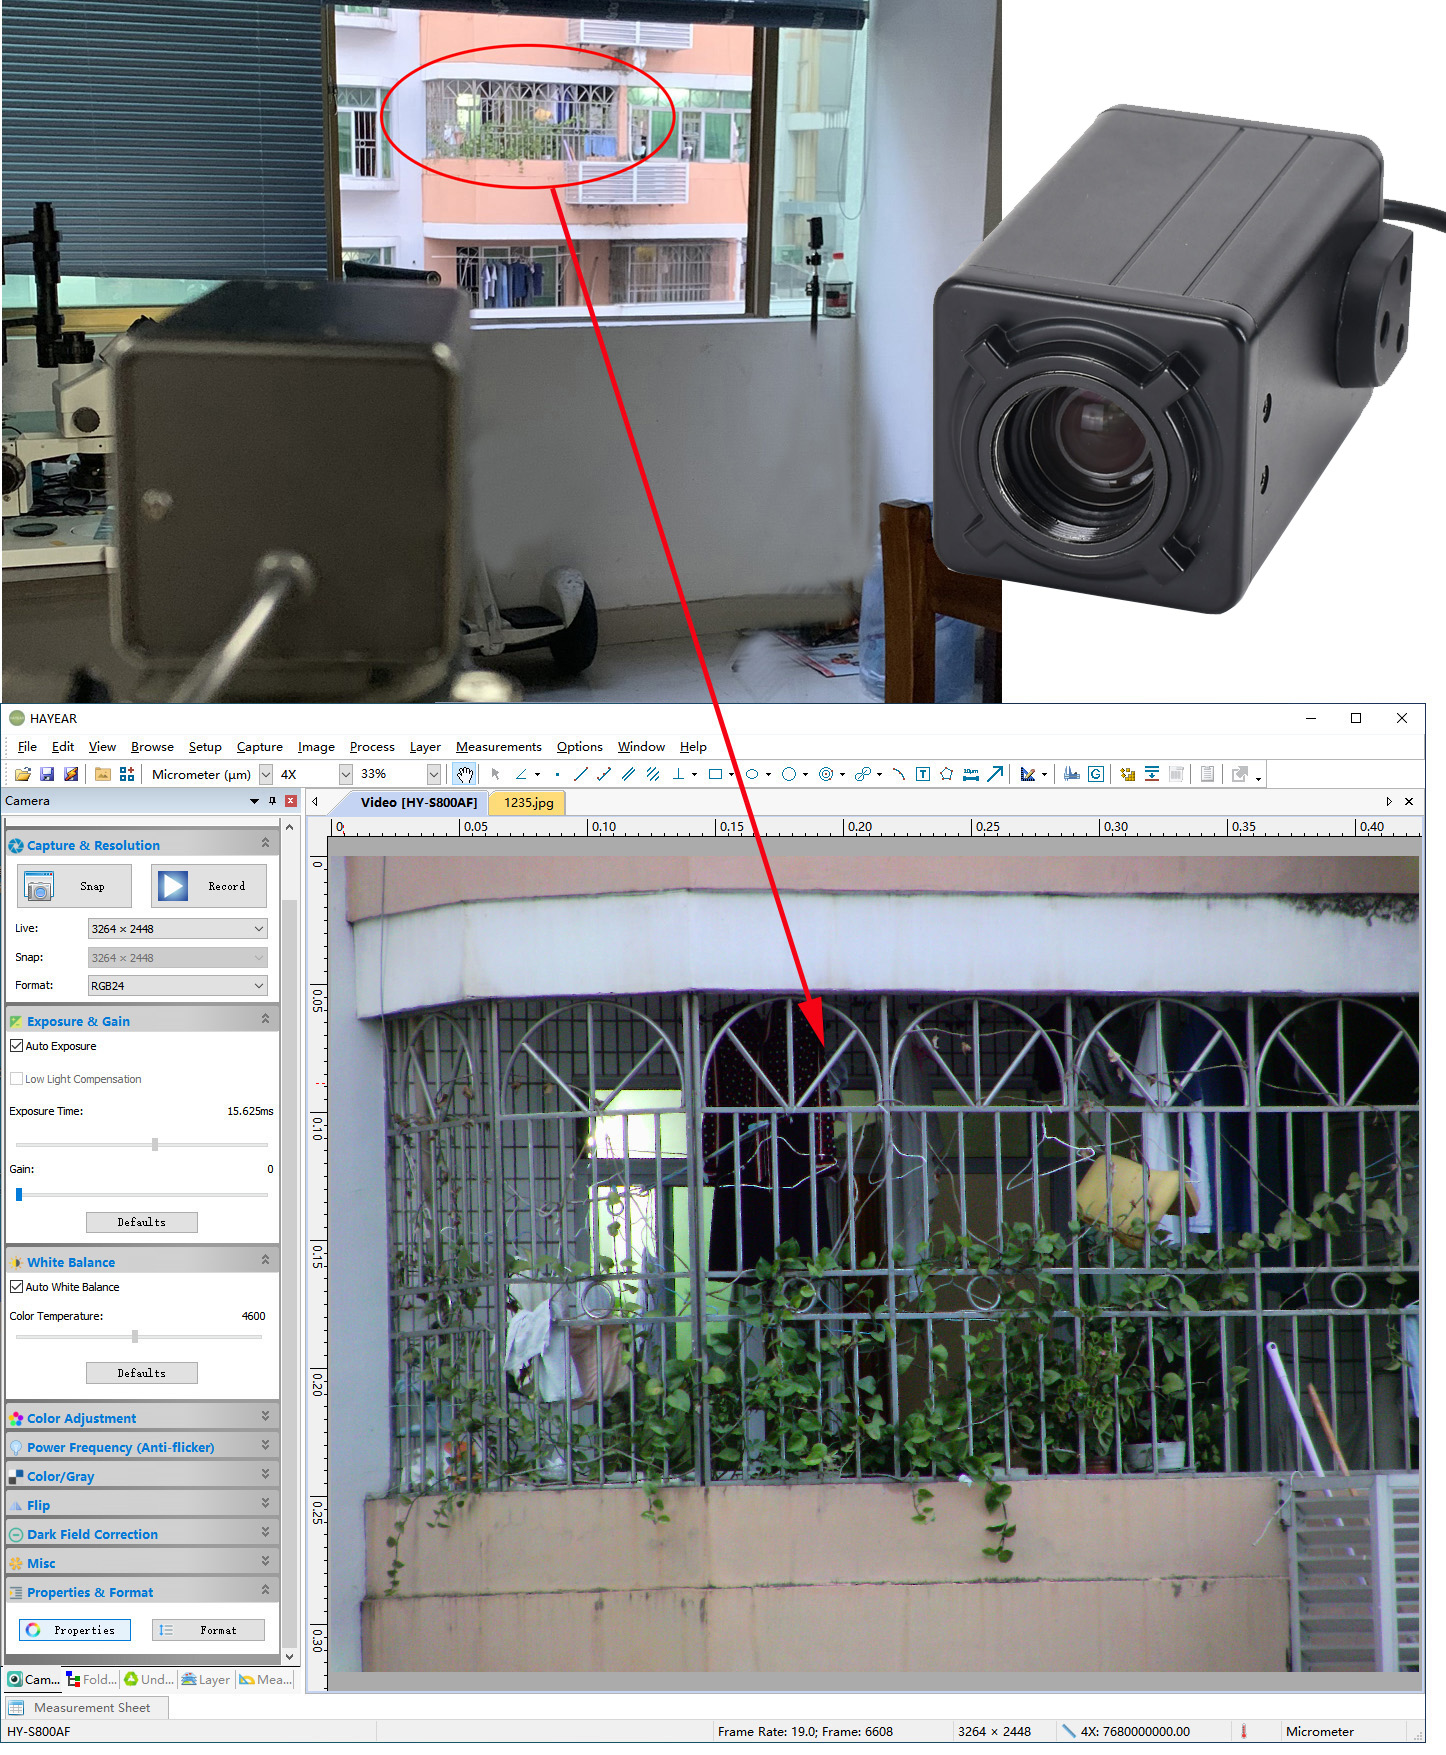 Auto/manual focus USB2.0 industrial video camera